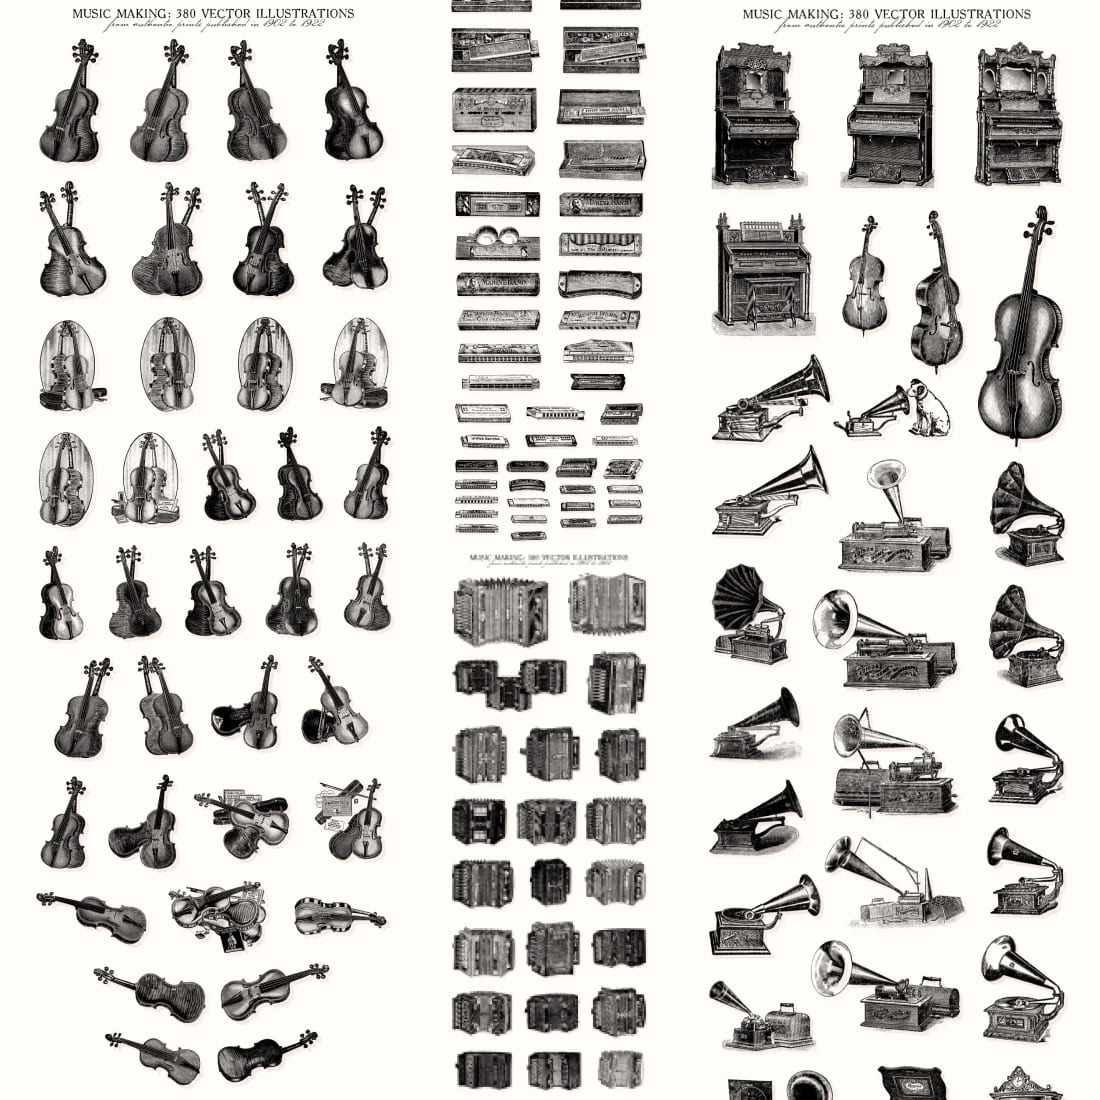 Bundle of amazing images of vintage musical instruments.